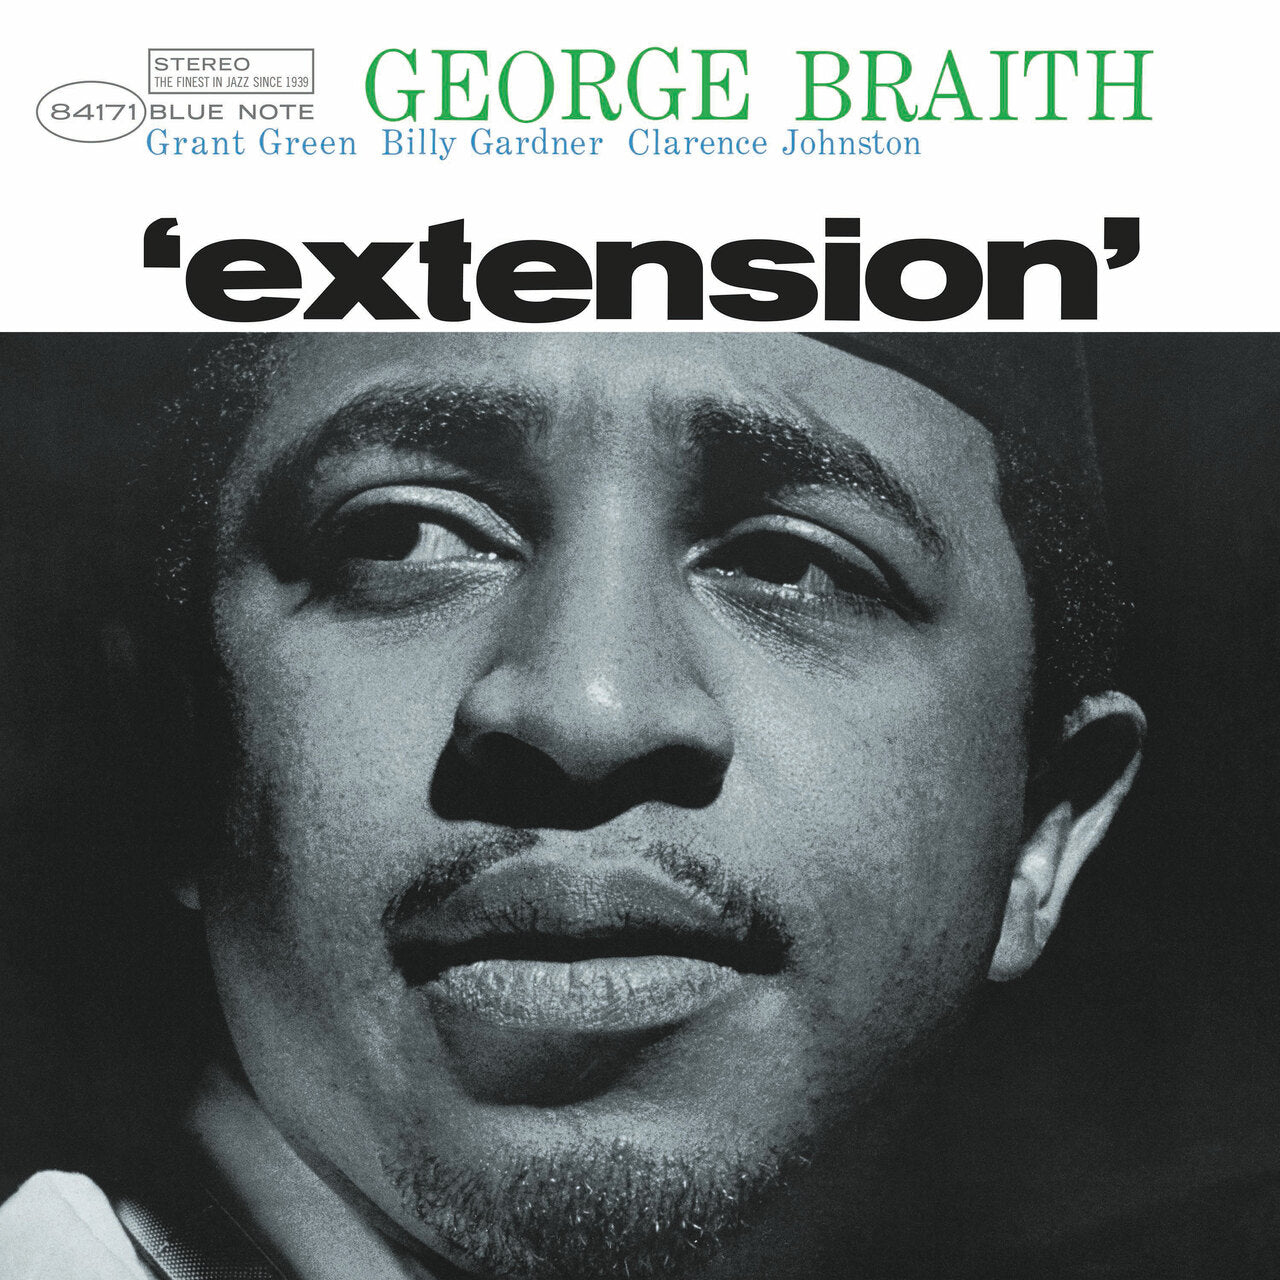 George Braith - Extension - Blue Note Classic LP